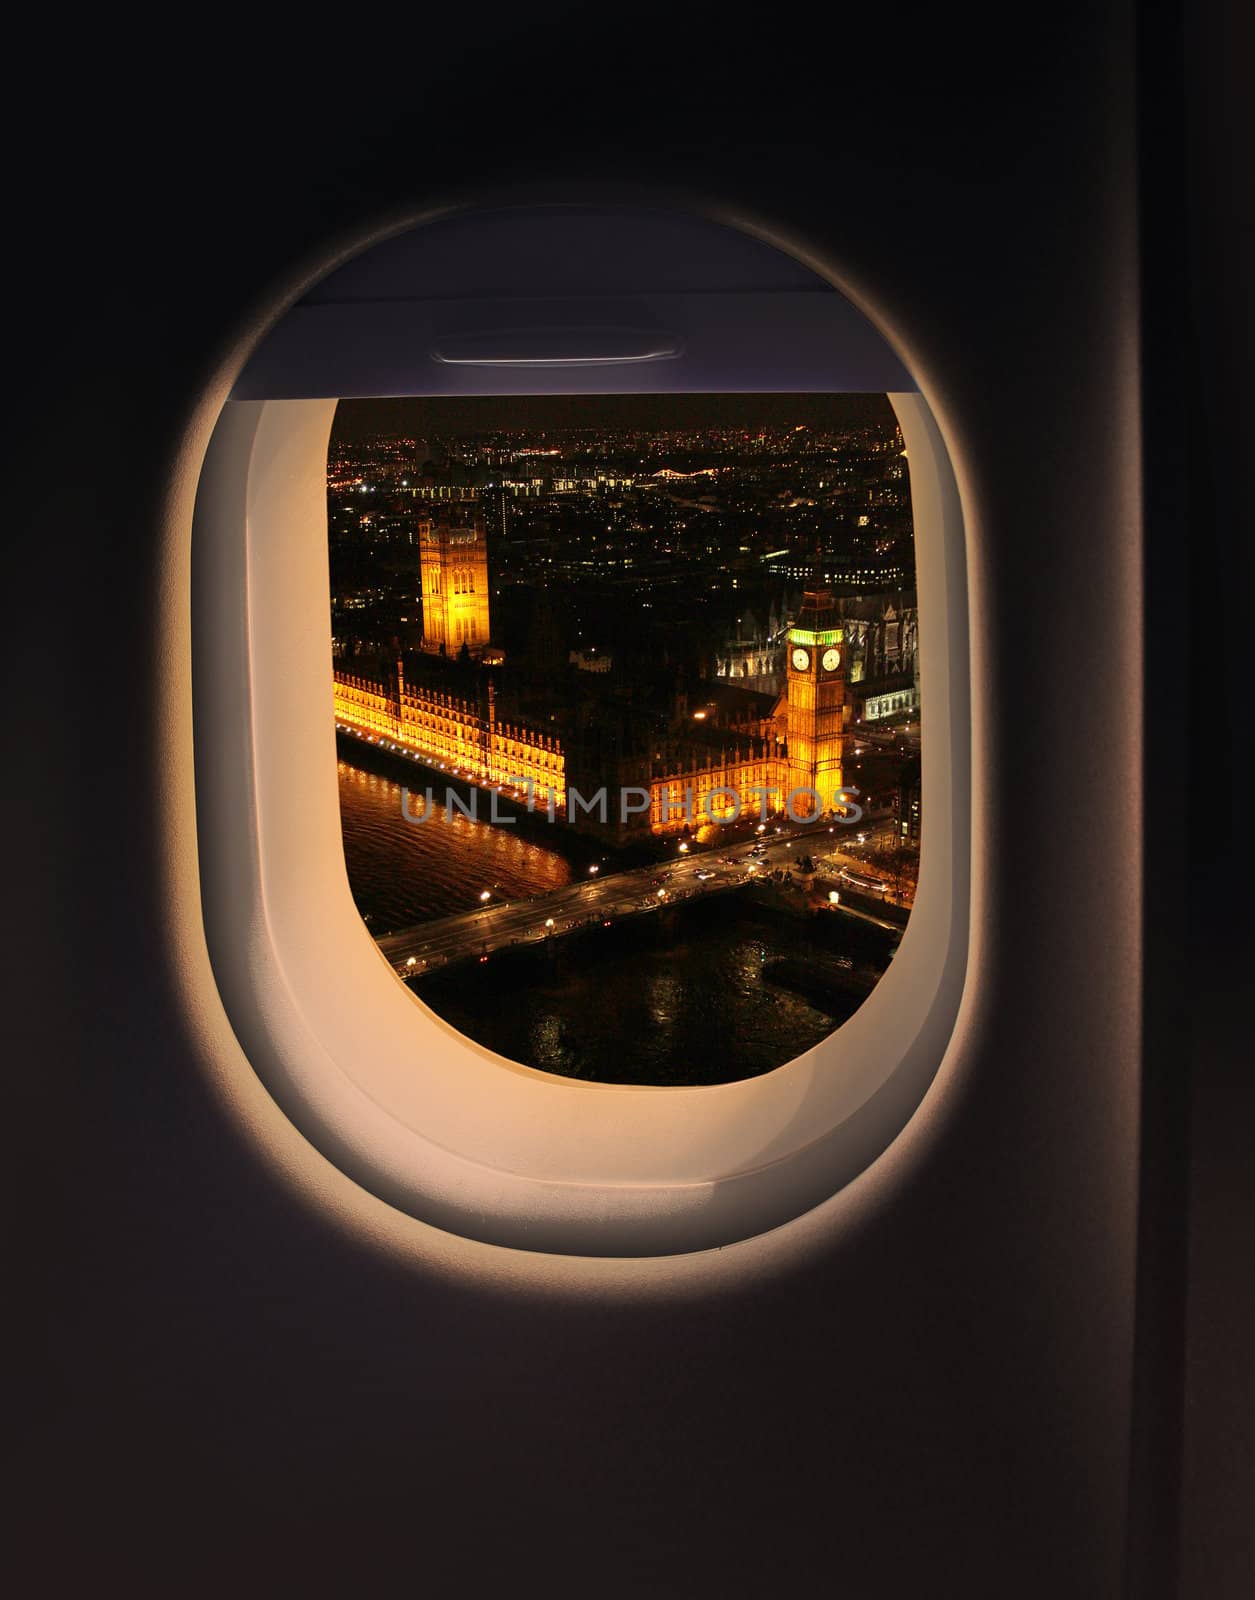 Approaching destination London UK destination, jet plane window night sky view